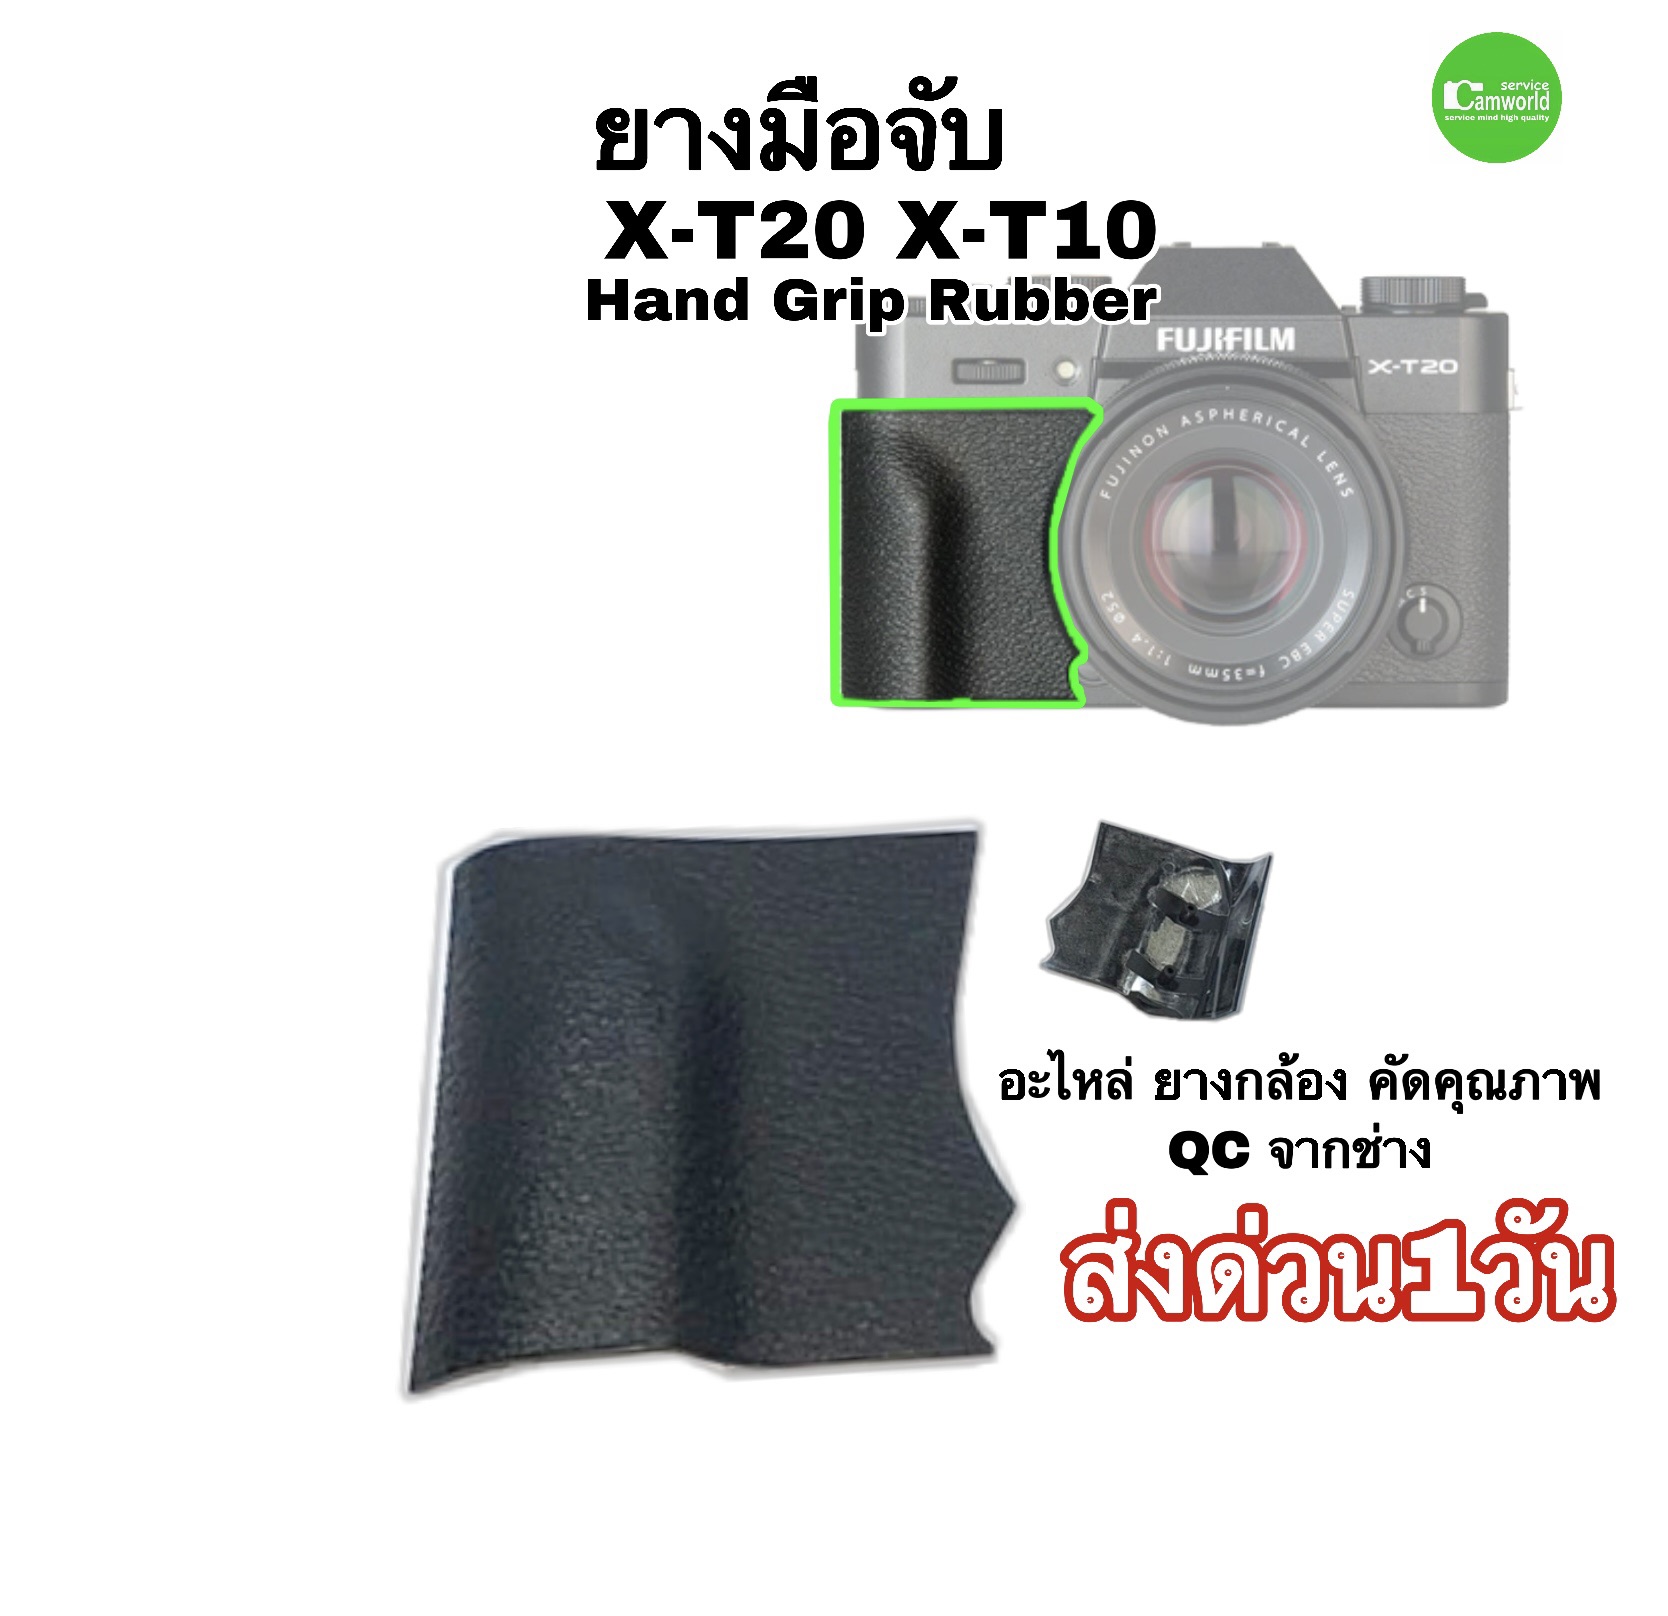 NEW Grip Thumb Rubber Cover For Fuji Fujifilm X-T10 XT10 X-T20 XT20 Camera Repair Part OEM 